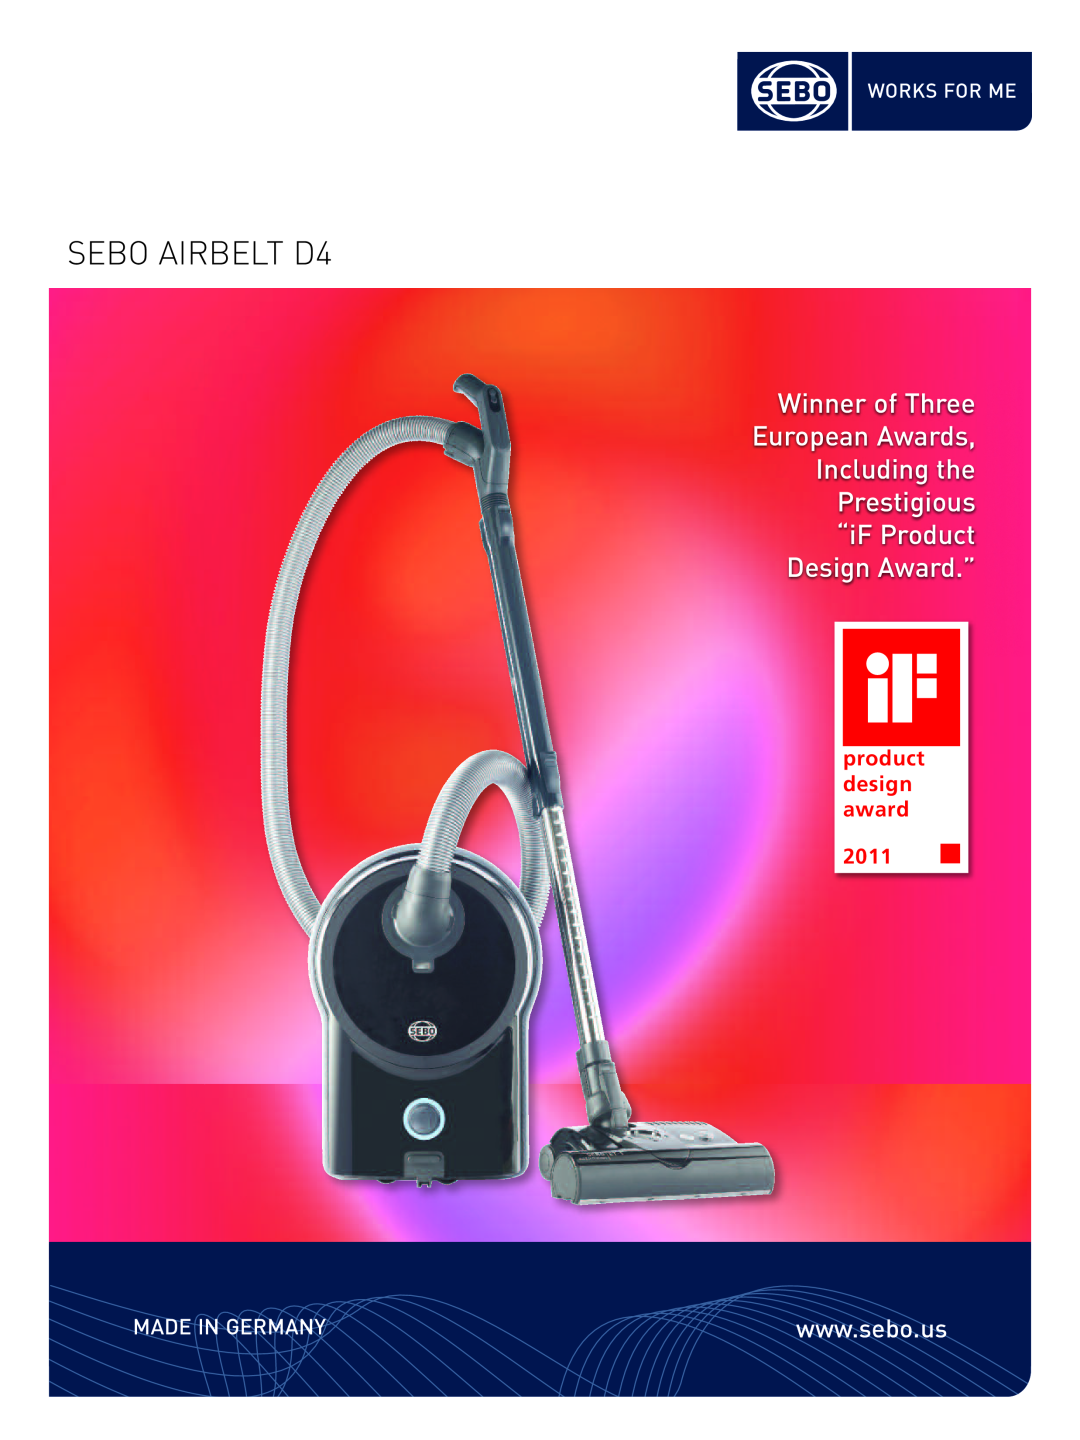 Sebo 90640AM manual Made In Germany, Works For Me, SEBO AIRBELT D4, Design Award.”, product design award 